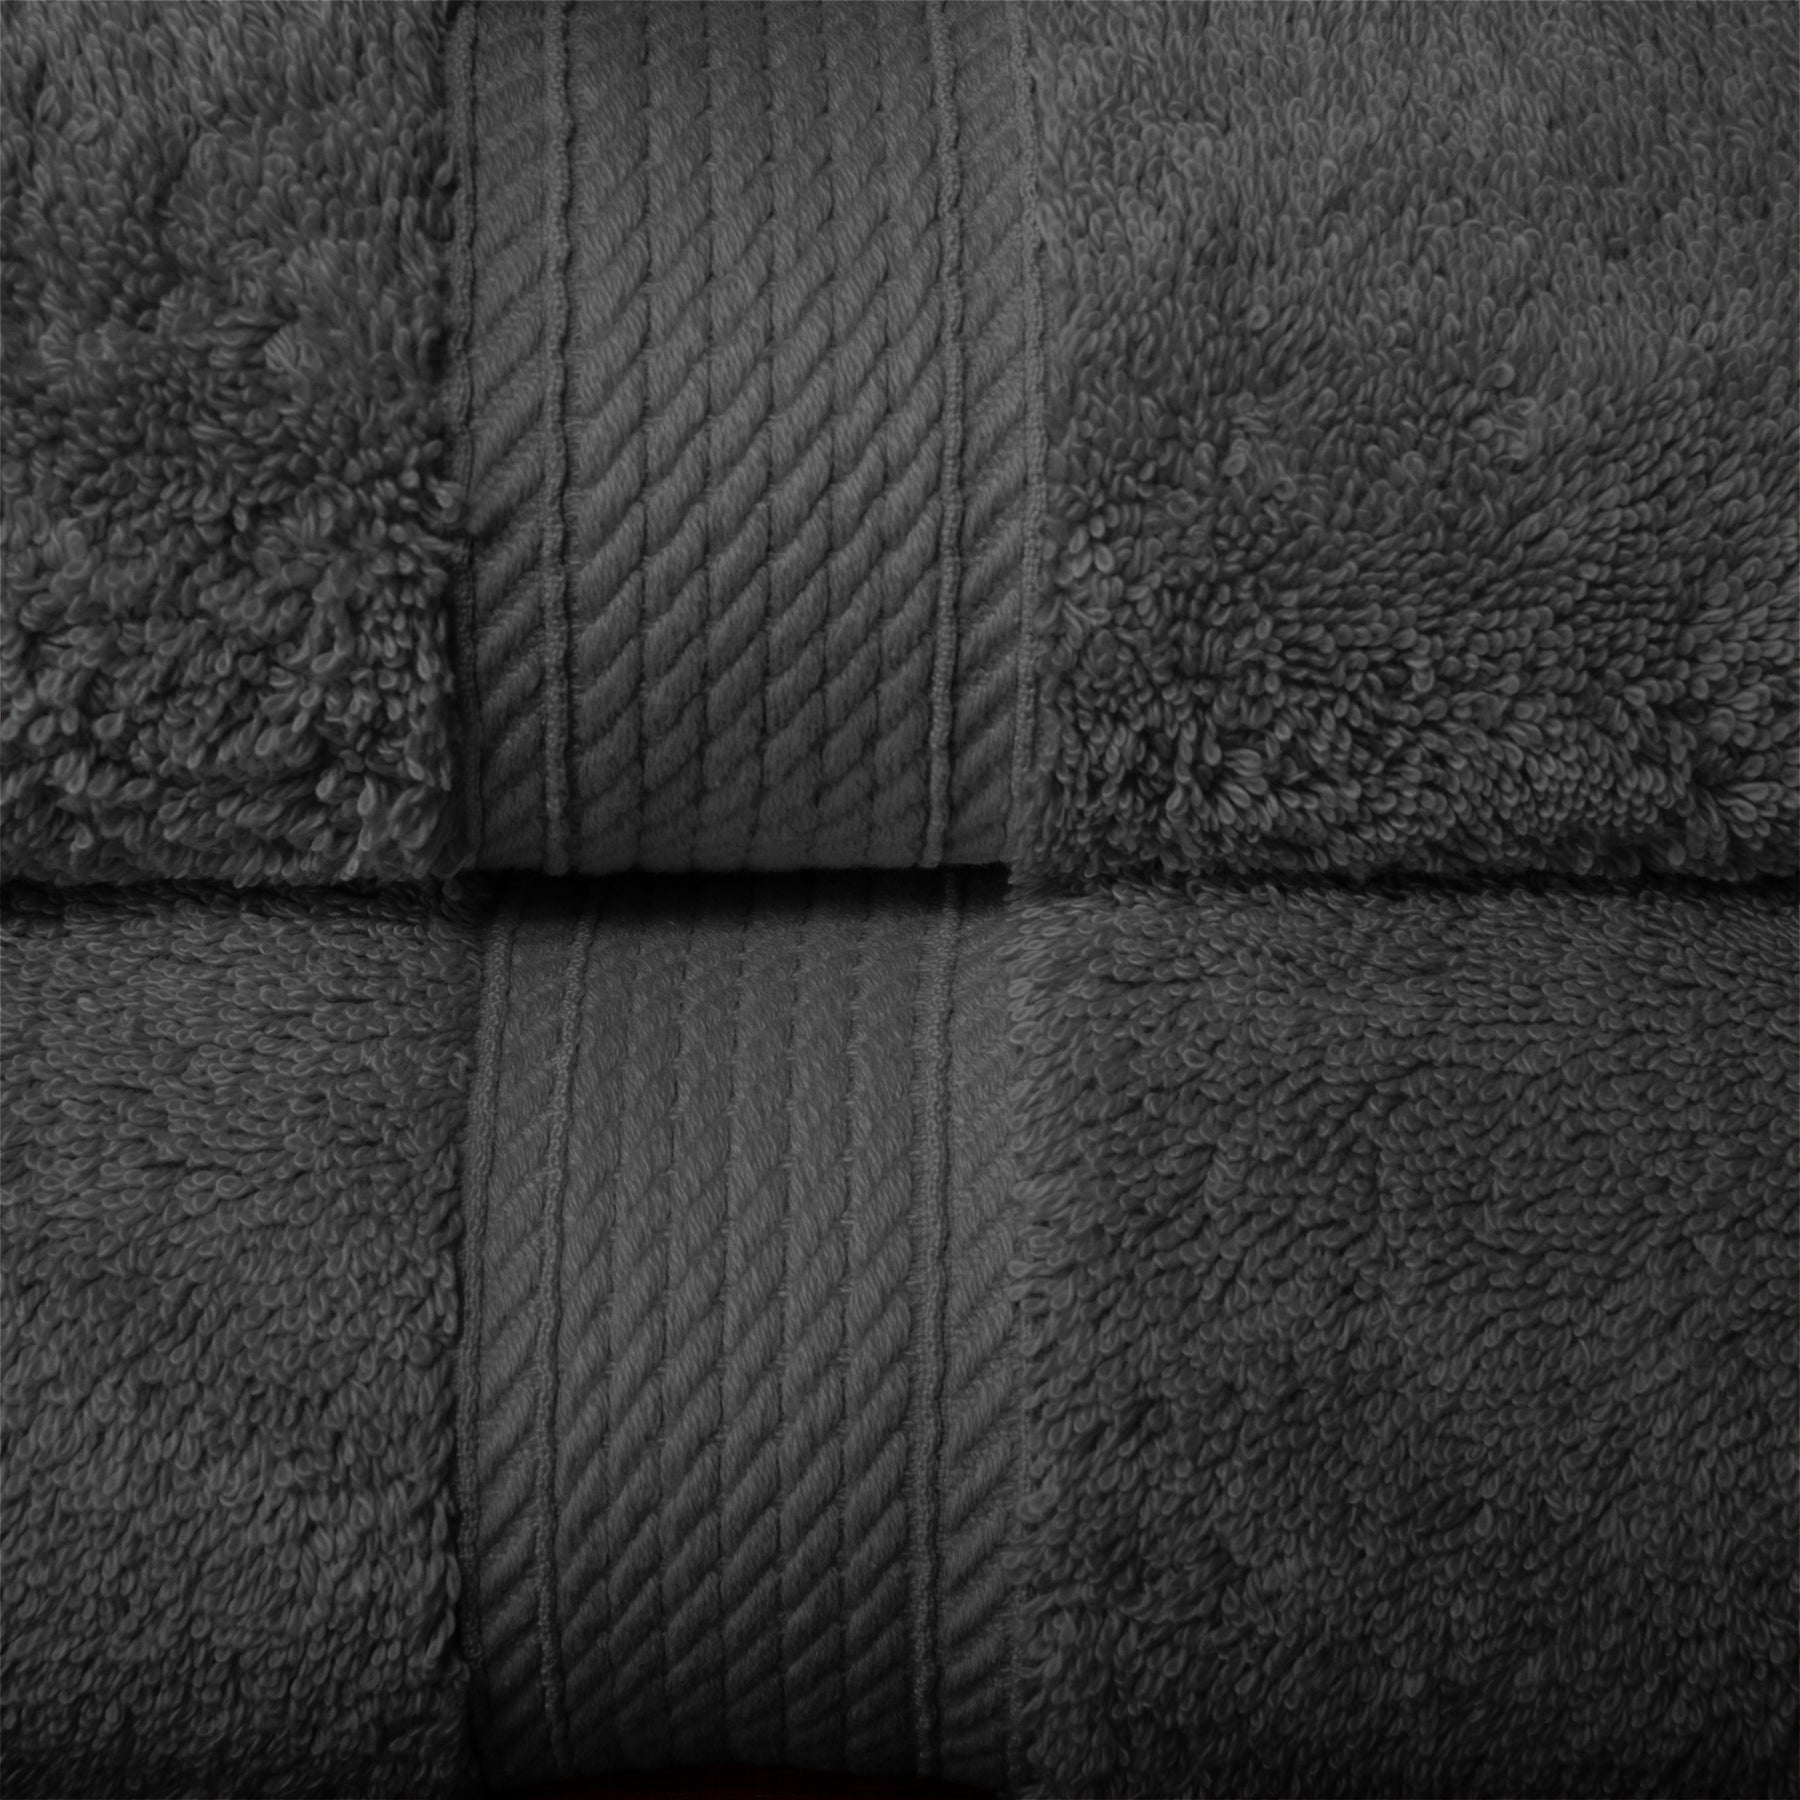 Shop Egyptian Cotton Dark Grey Bath Towel Set of 6